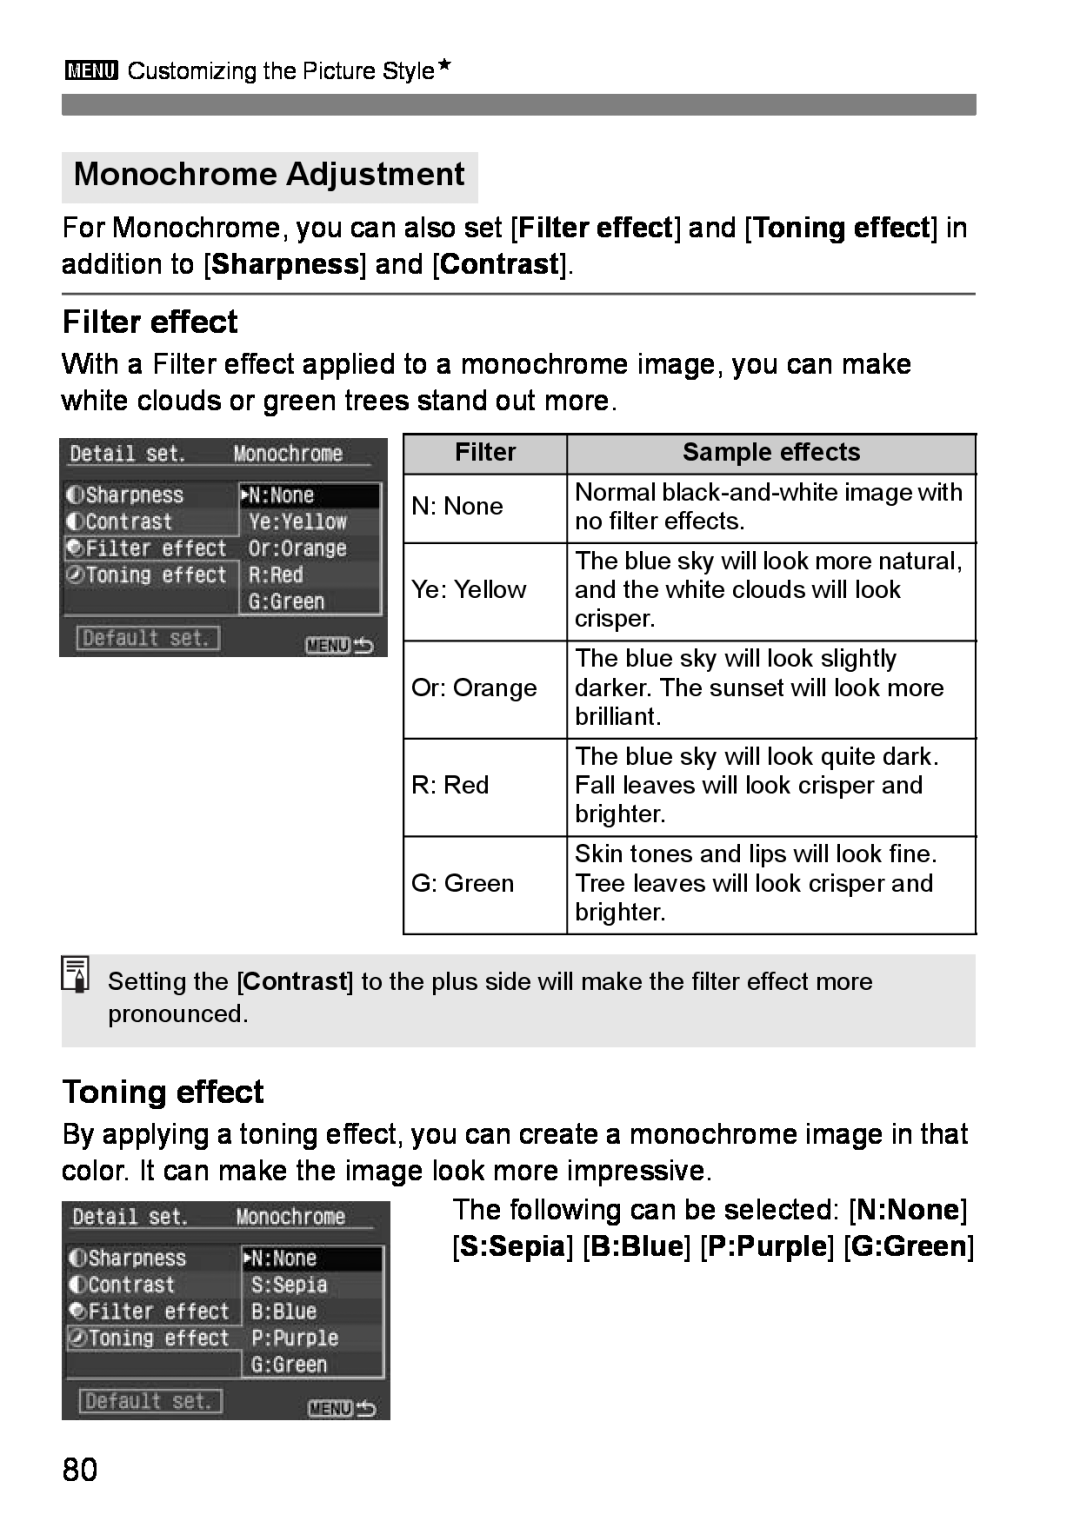 Canon EOS DIGITAL REBEL XTI instruction manual Monochrome Adjustment, Filter effect, Toning effect 